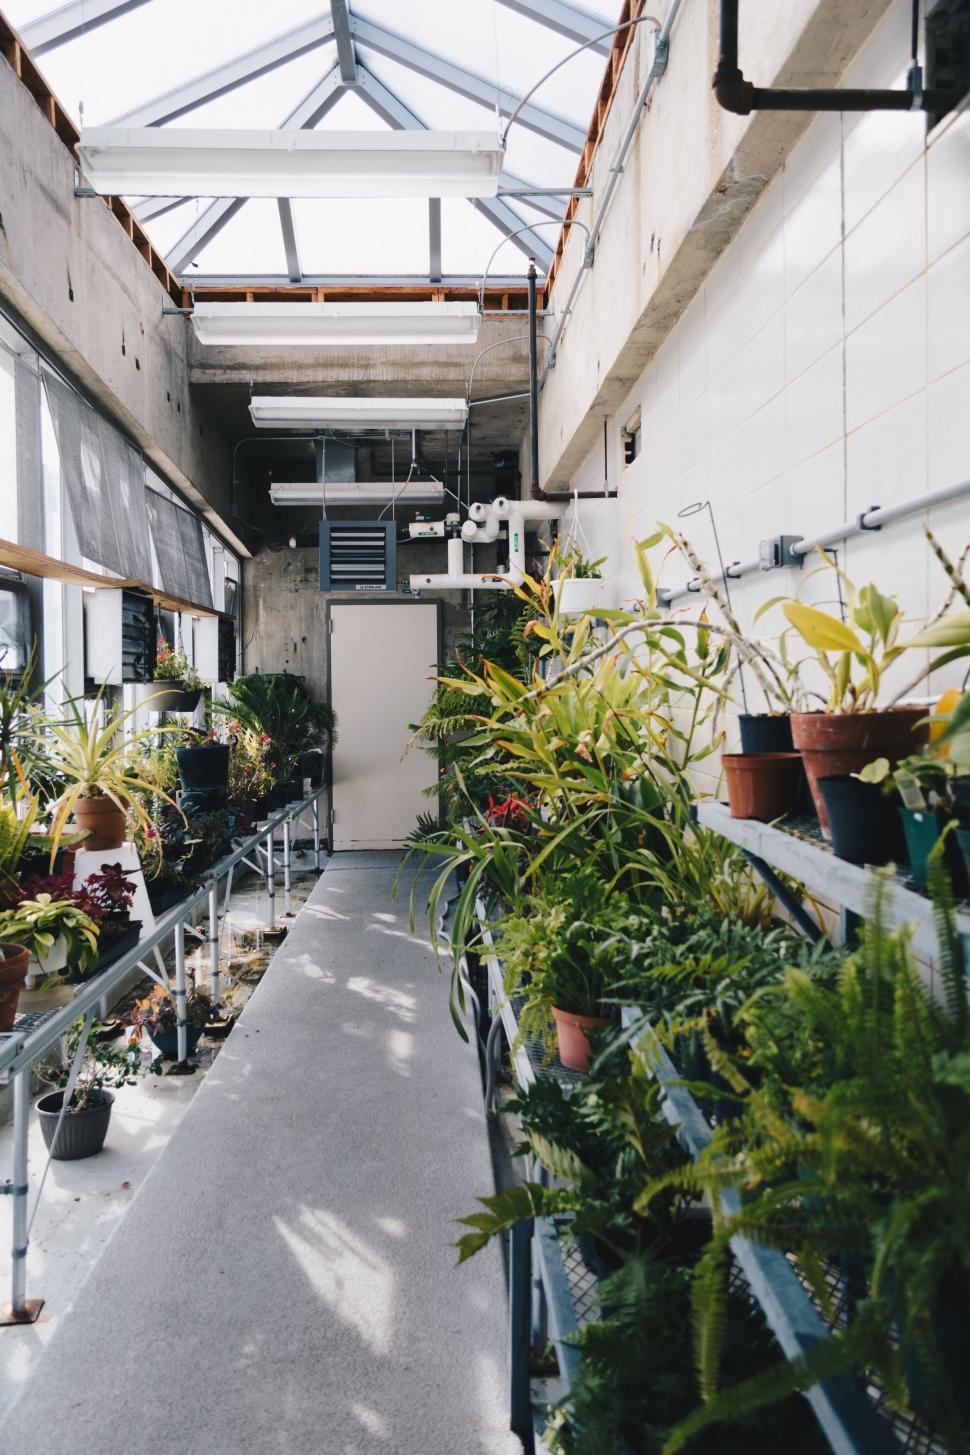 Free Image of Lush Greenhouse Filled With Abundant Plants 